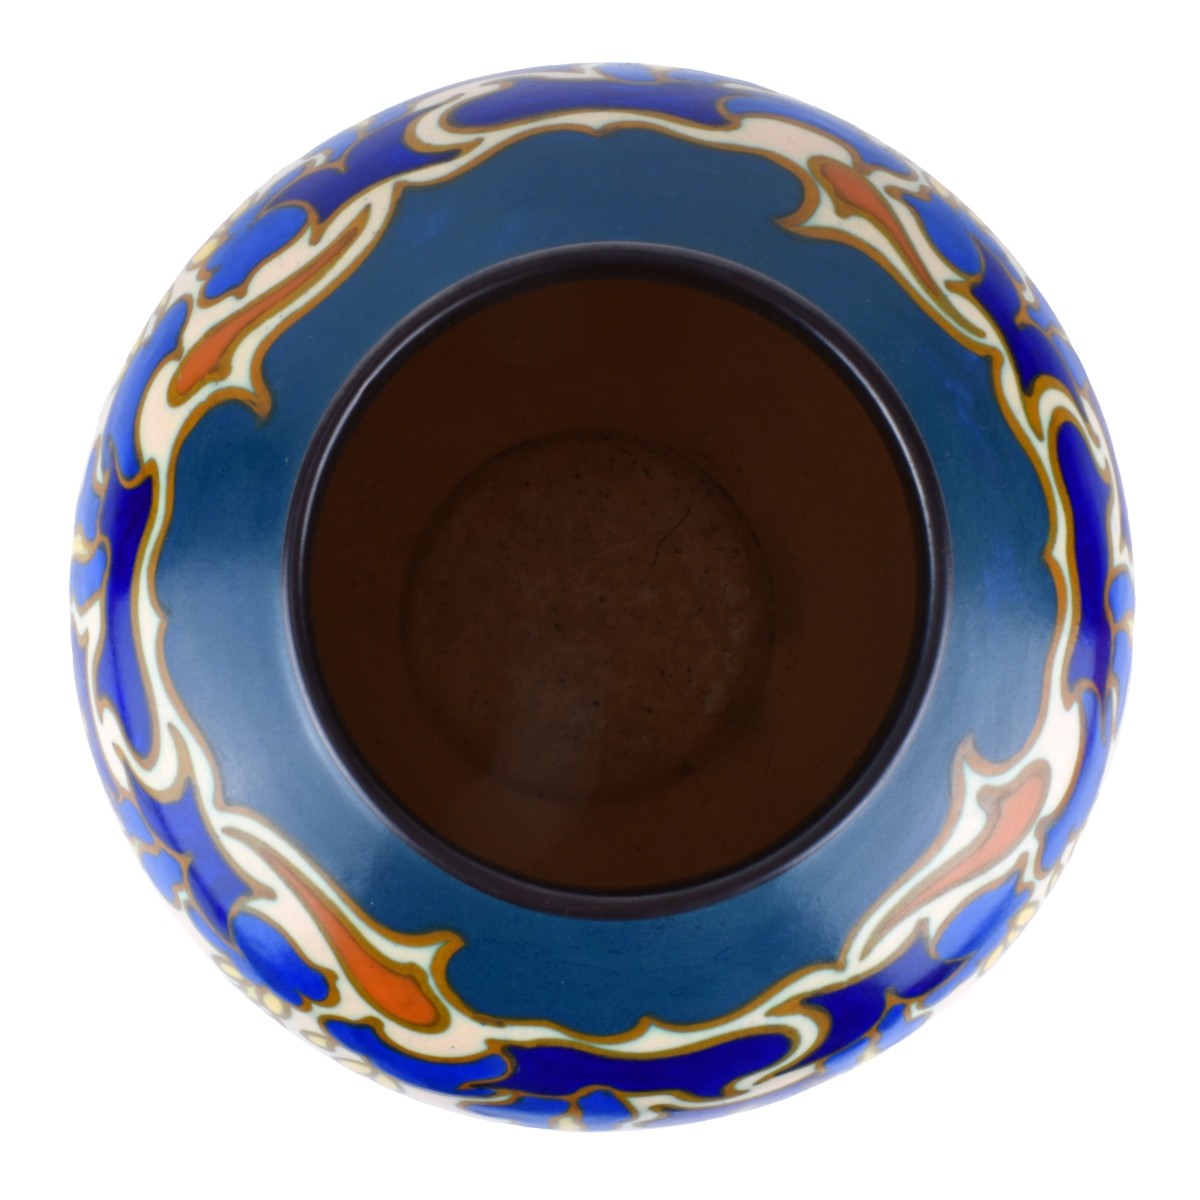 Gouda Matte Glaze Pottery Vase